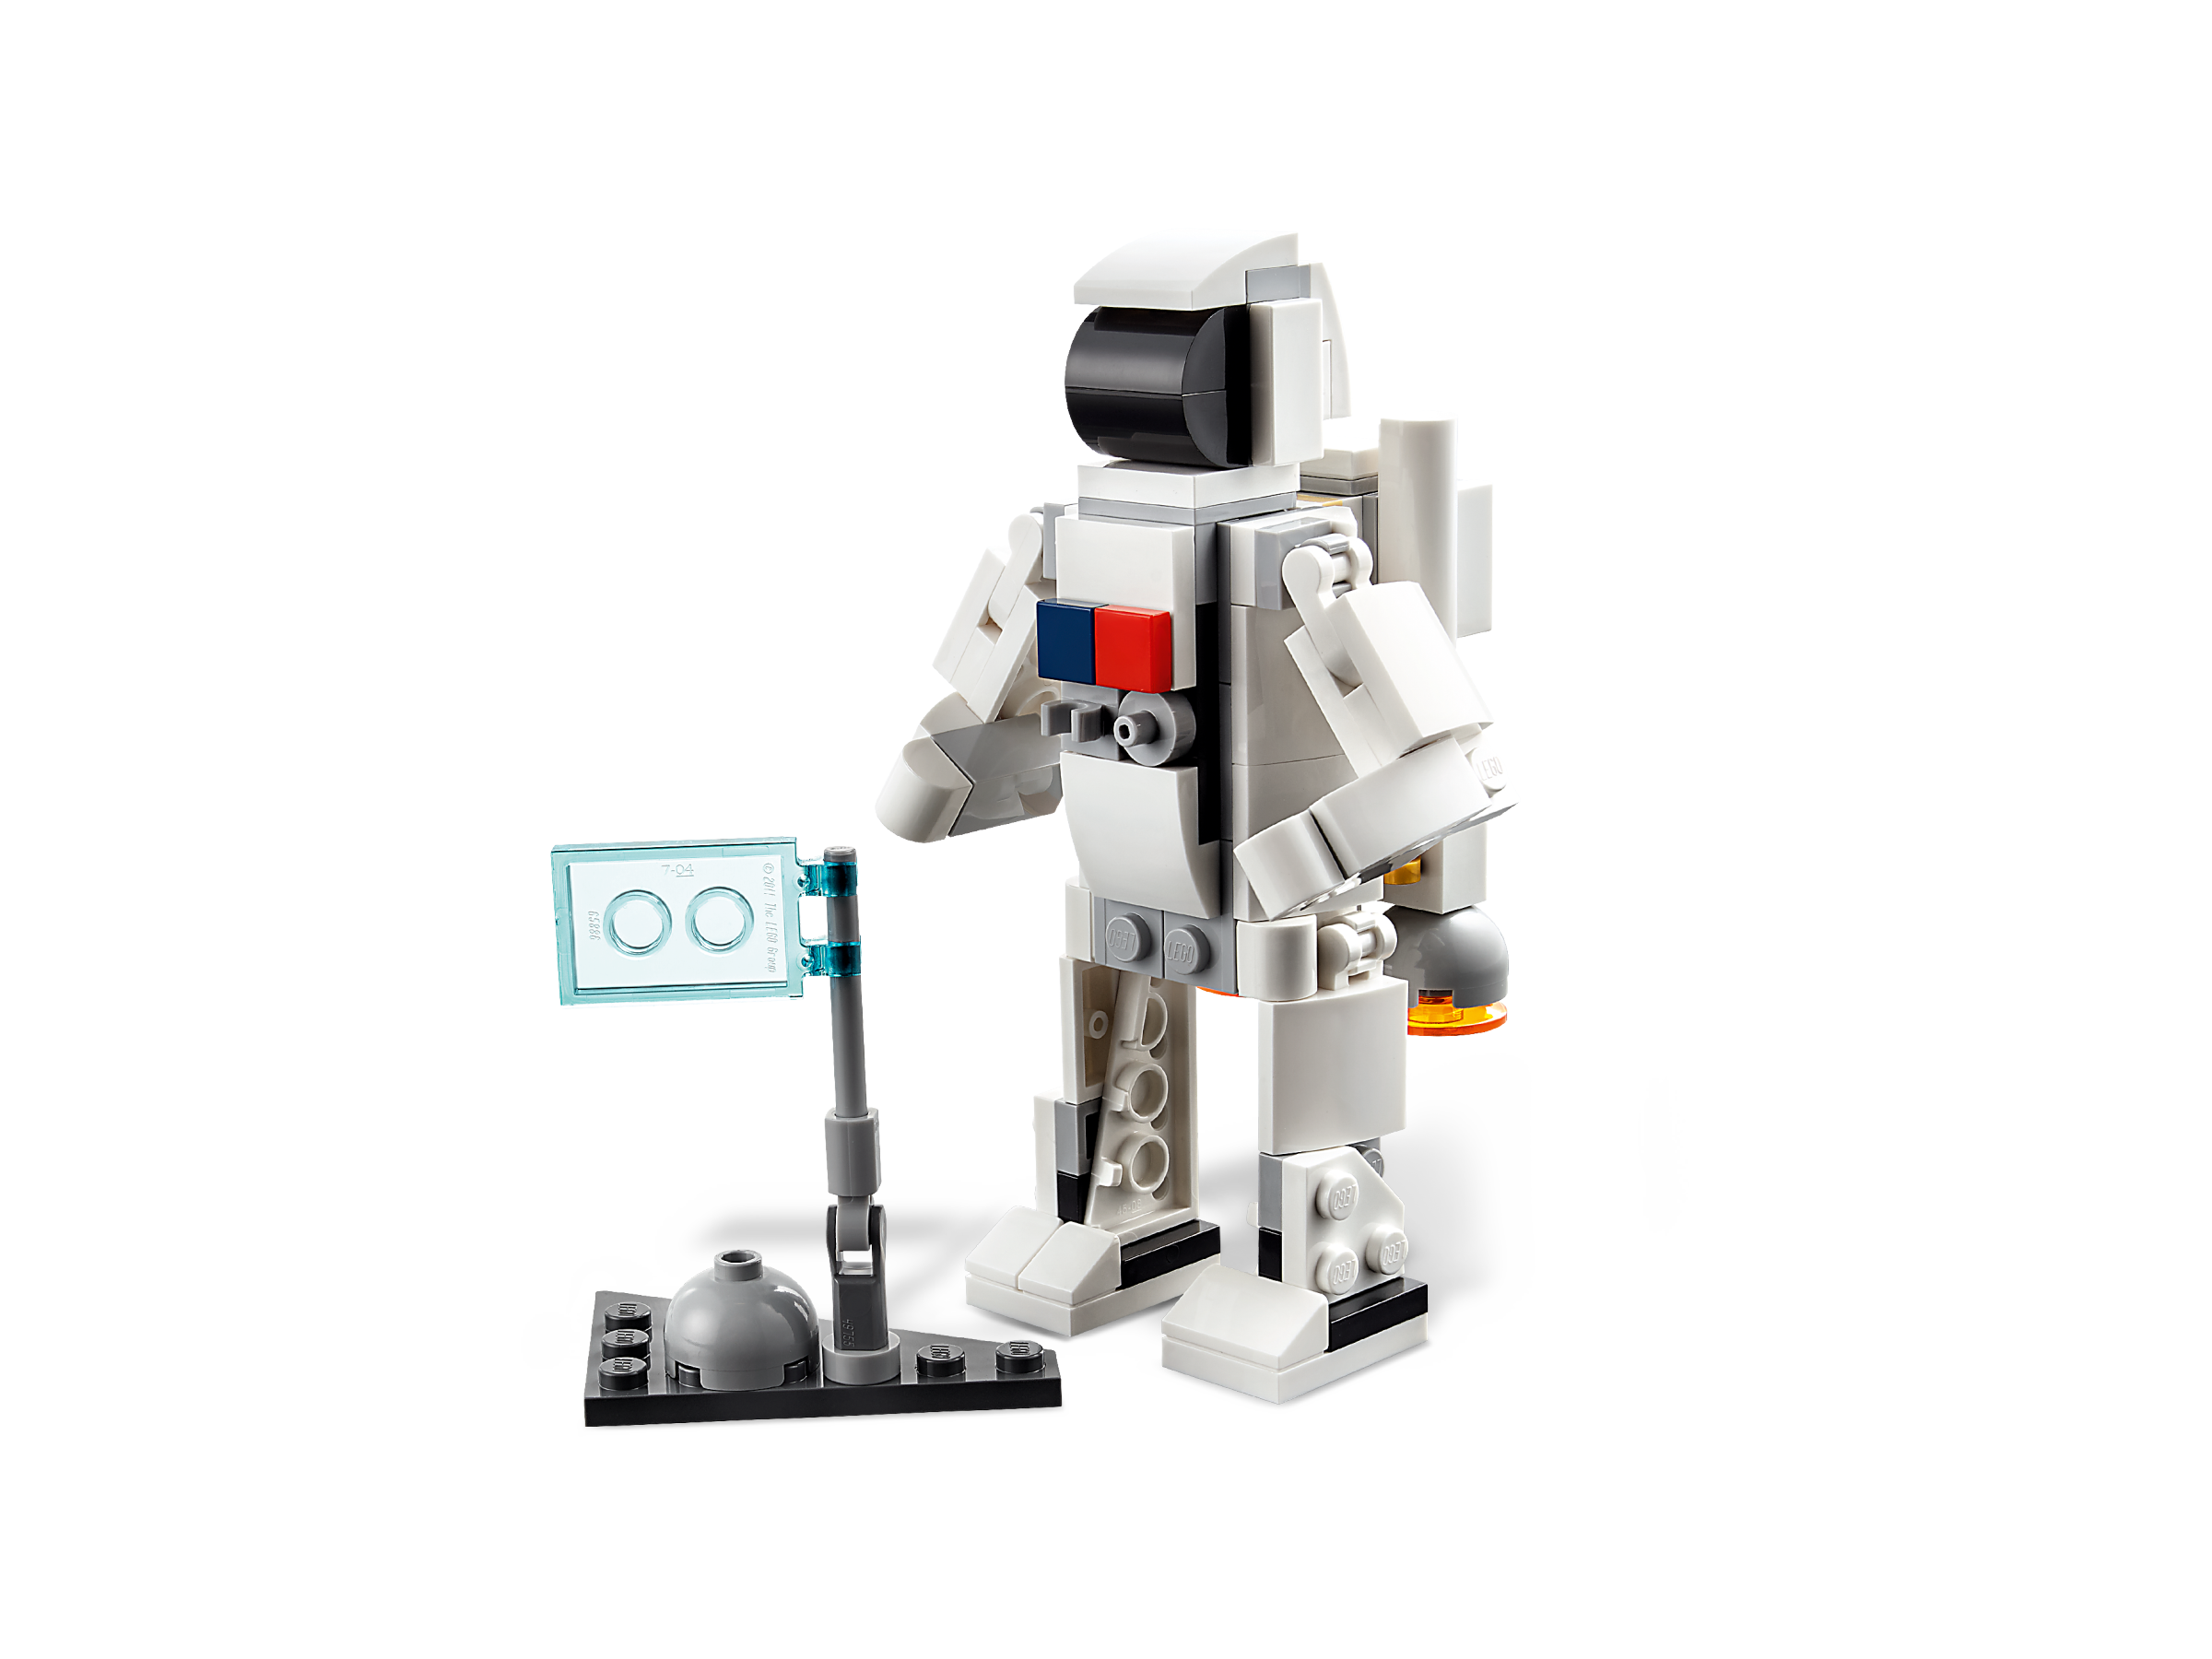 LEGO Creator Space Shuttle 31134 by LEGO Systems Inc.